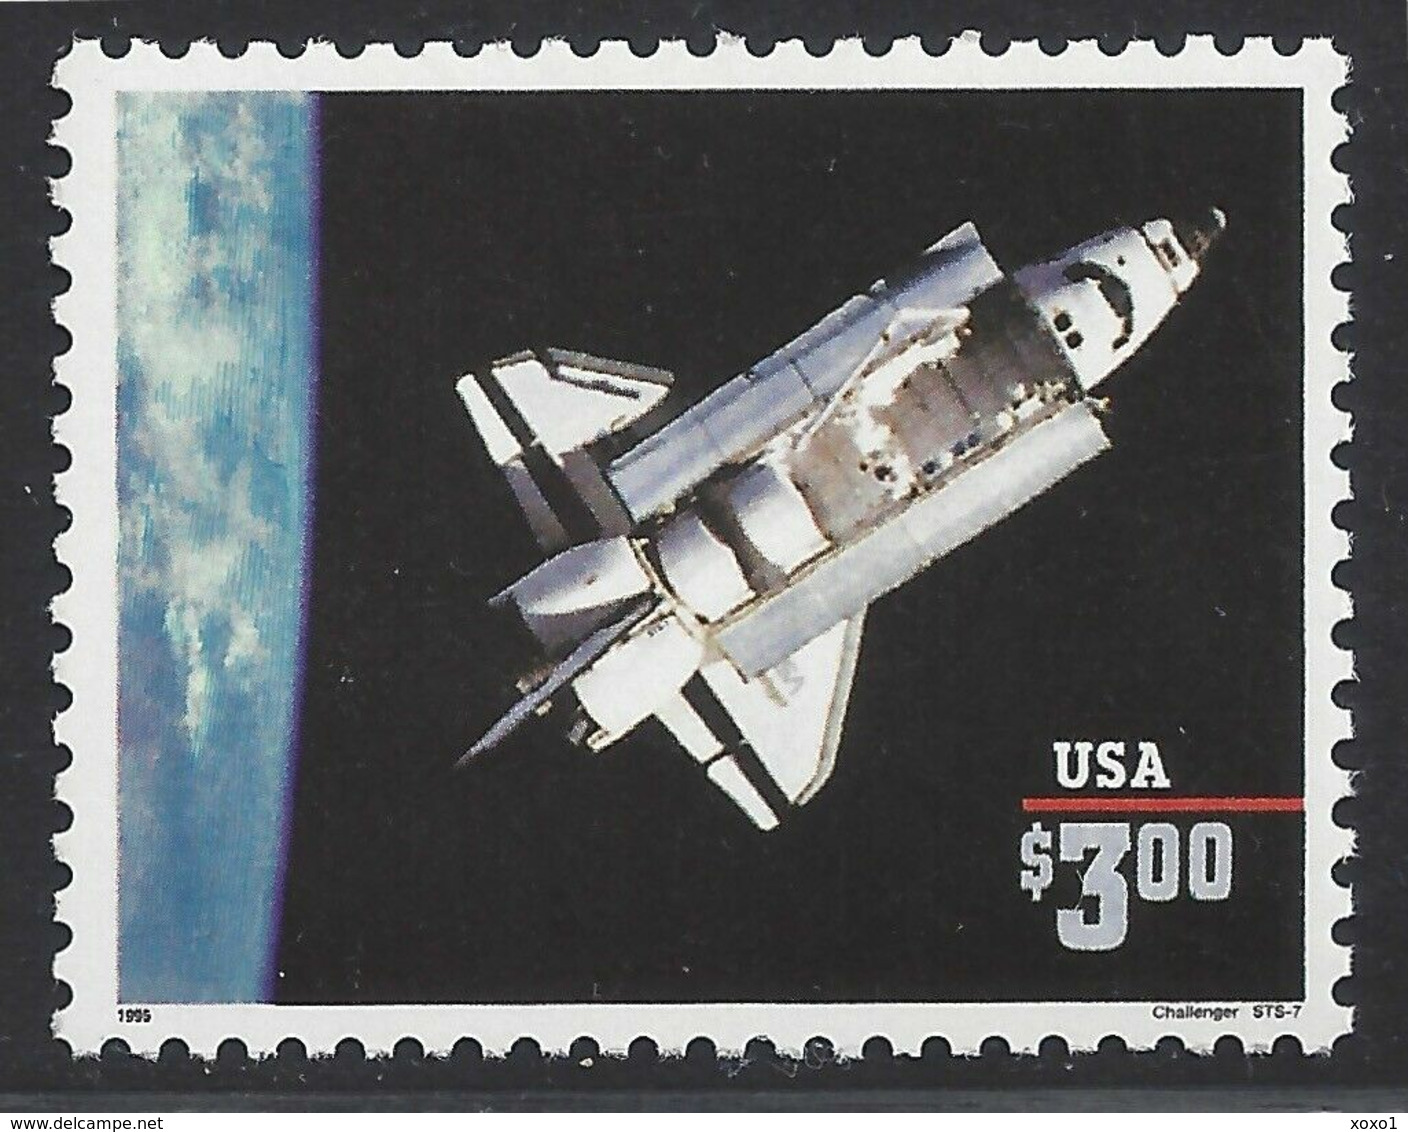 USA 1995 MiNr. 2581 I  CHALLENGER SPACE SHUTTLE 1v  MNH**  7.50 € - USA